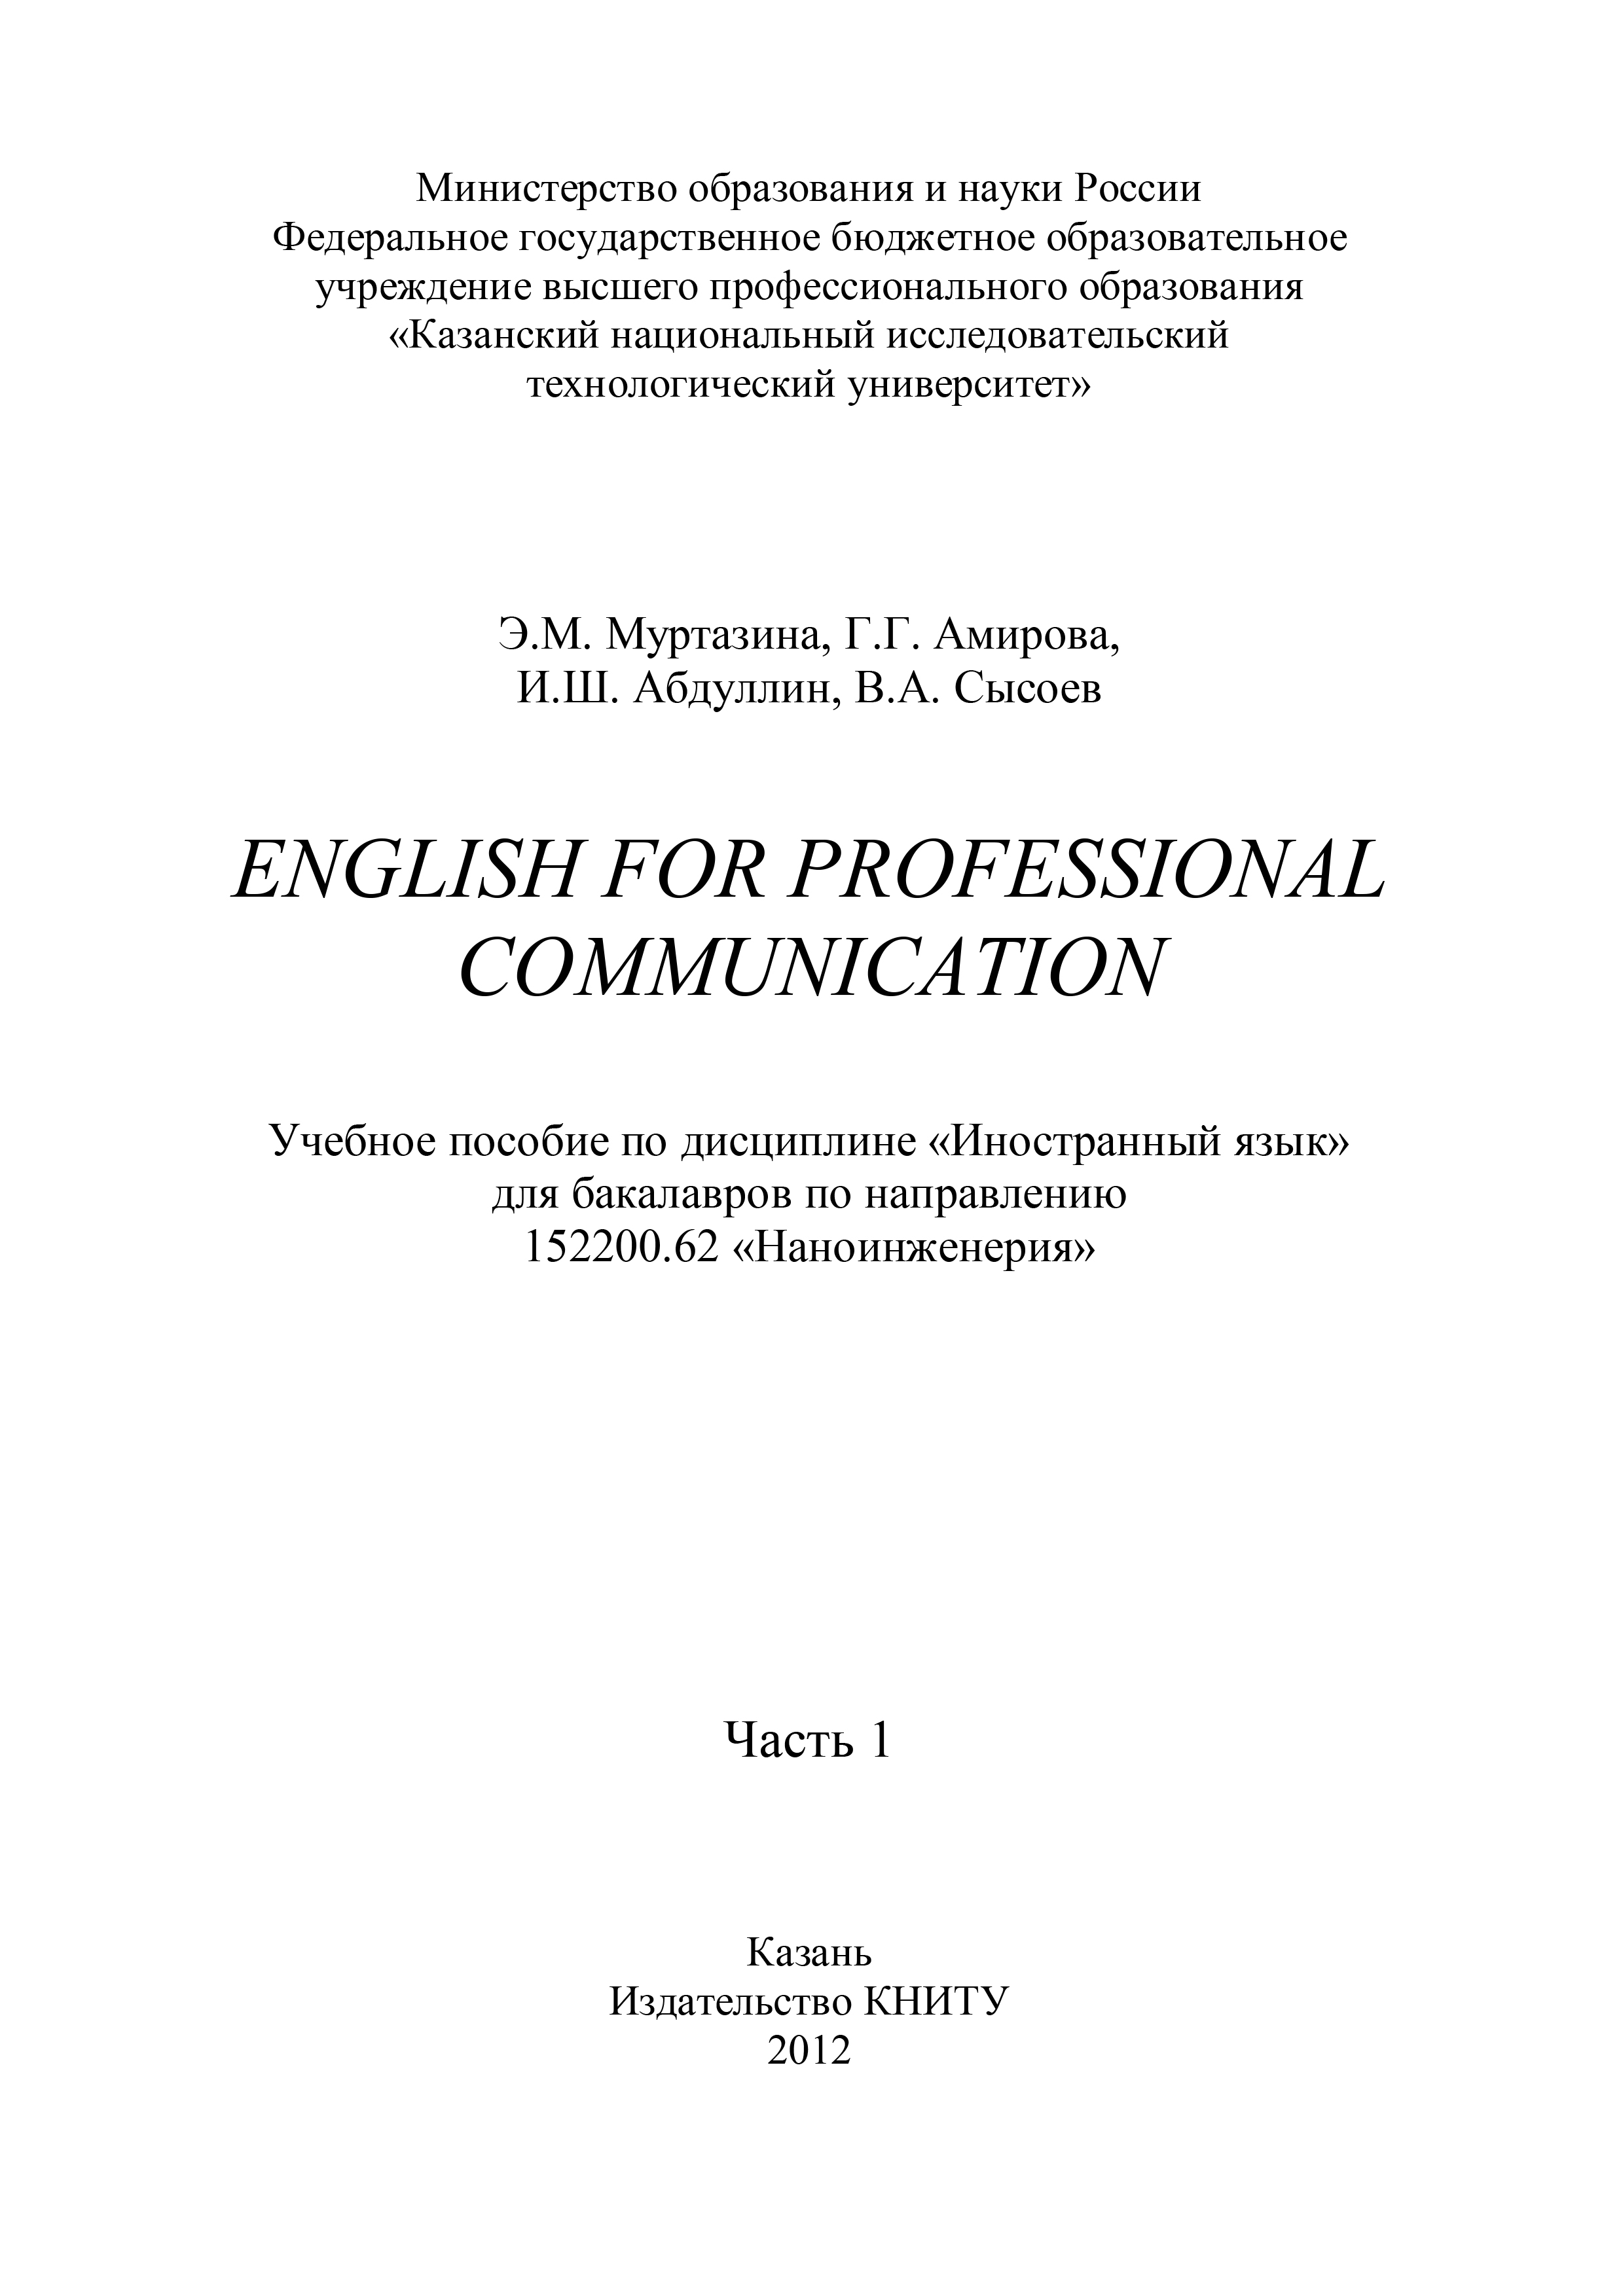 English for Professional Communication.Часть 1